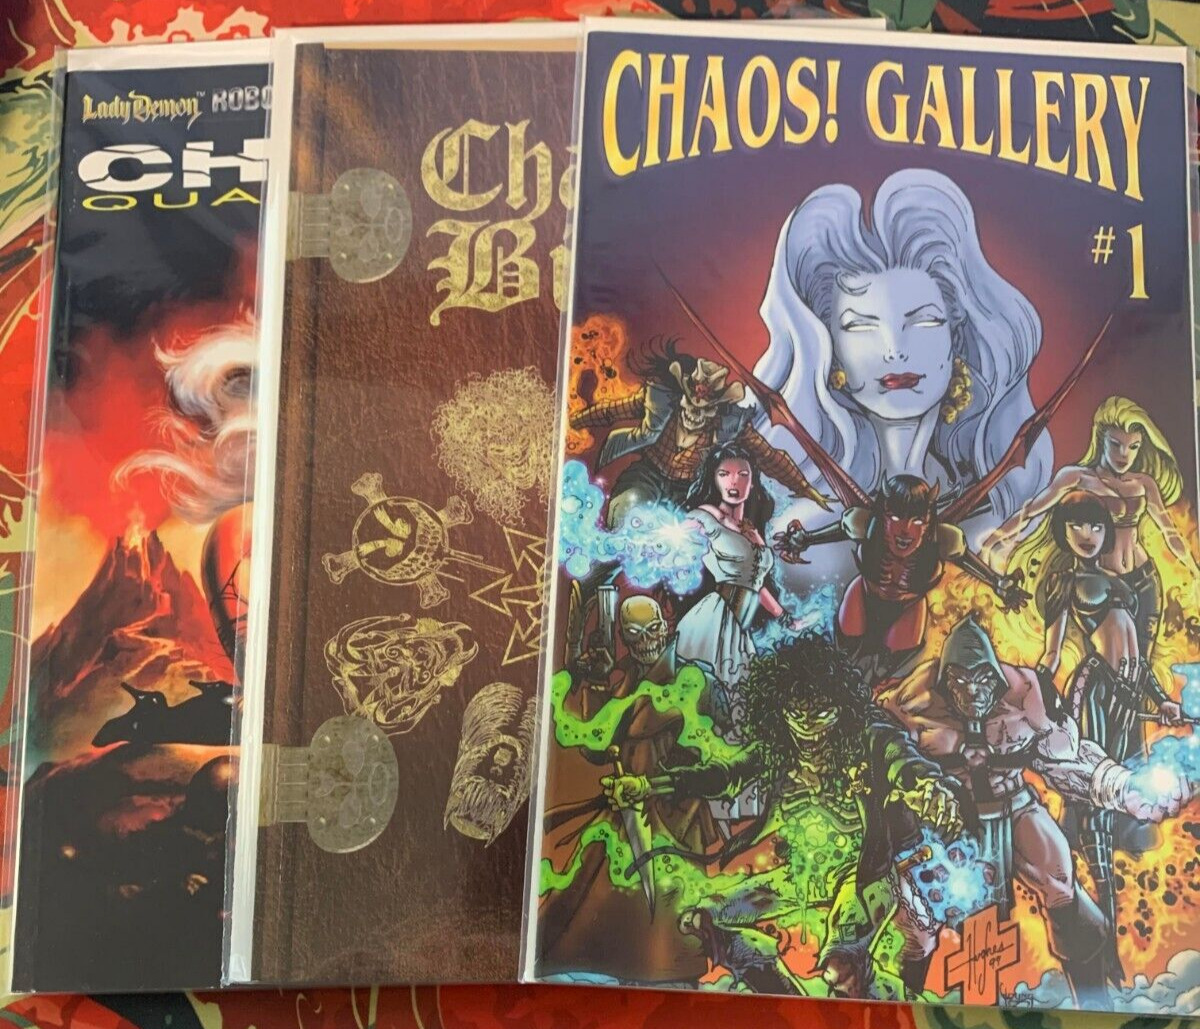 Chaos Bible #1 (1995) / Chaos Gallery #1 (1997) Chaos Quarterly #2 (1995)